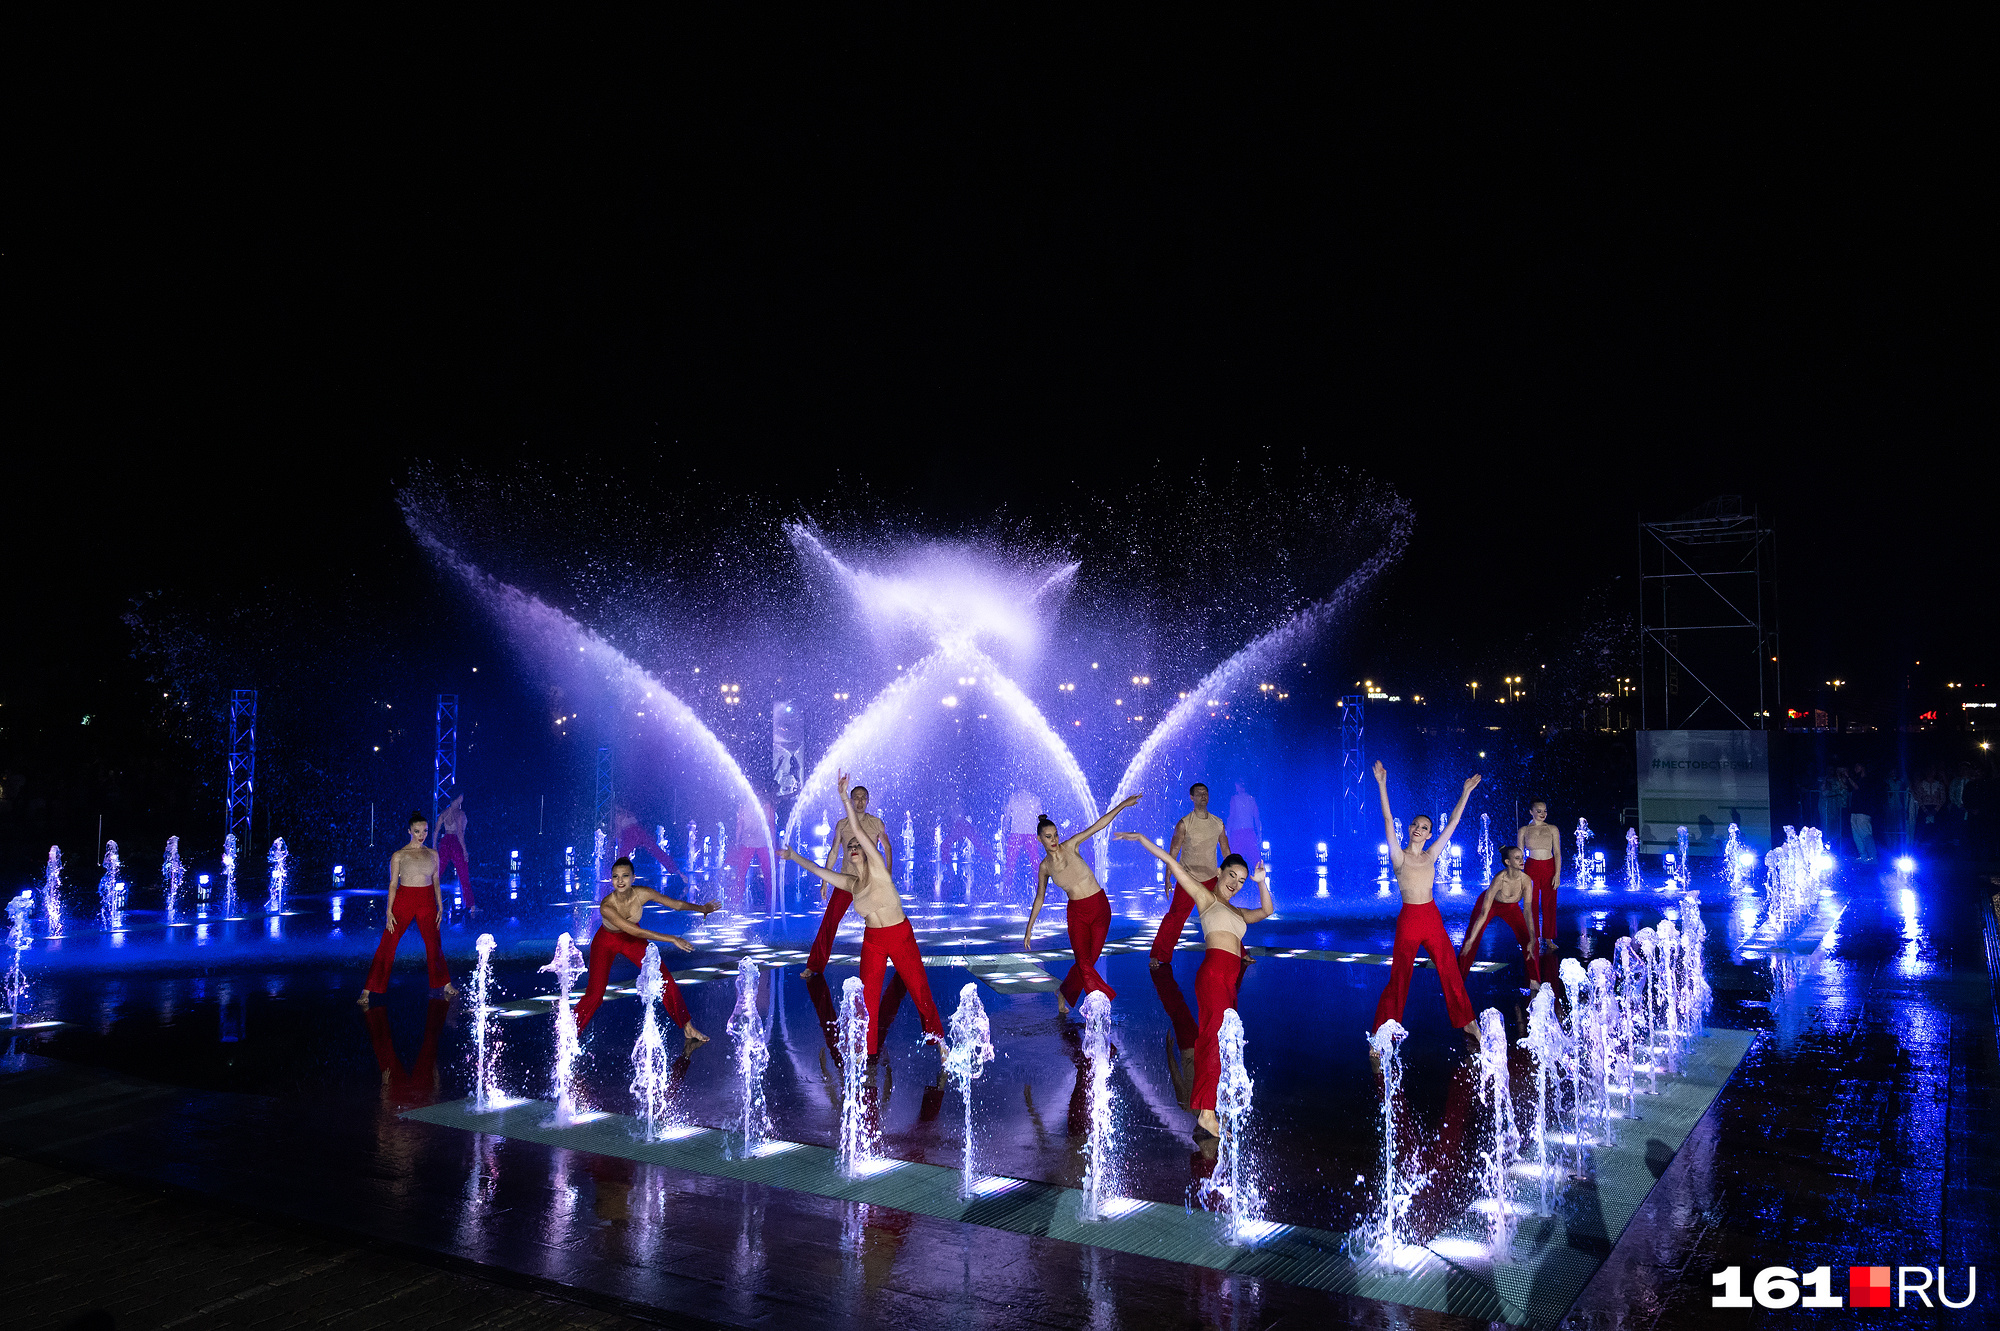 Артисты двигались симметрично «танцу» фонтана